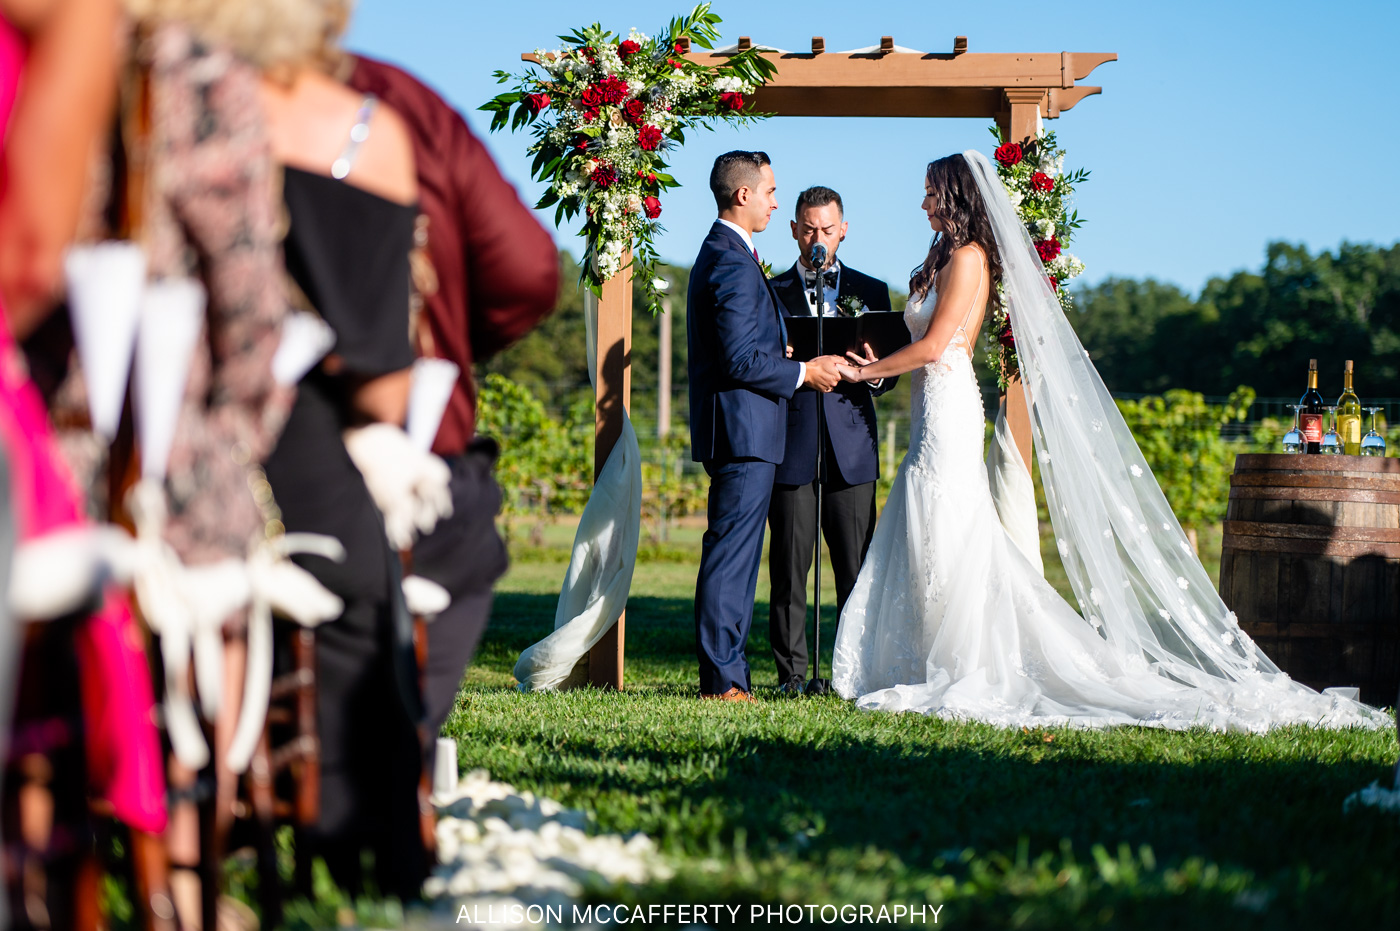 Valenzano Winery Pavilion Wedding Photos